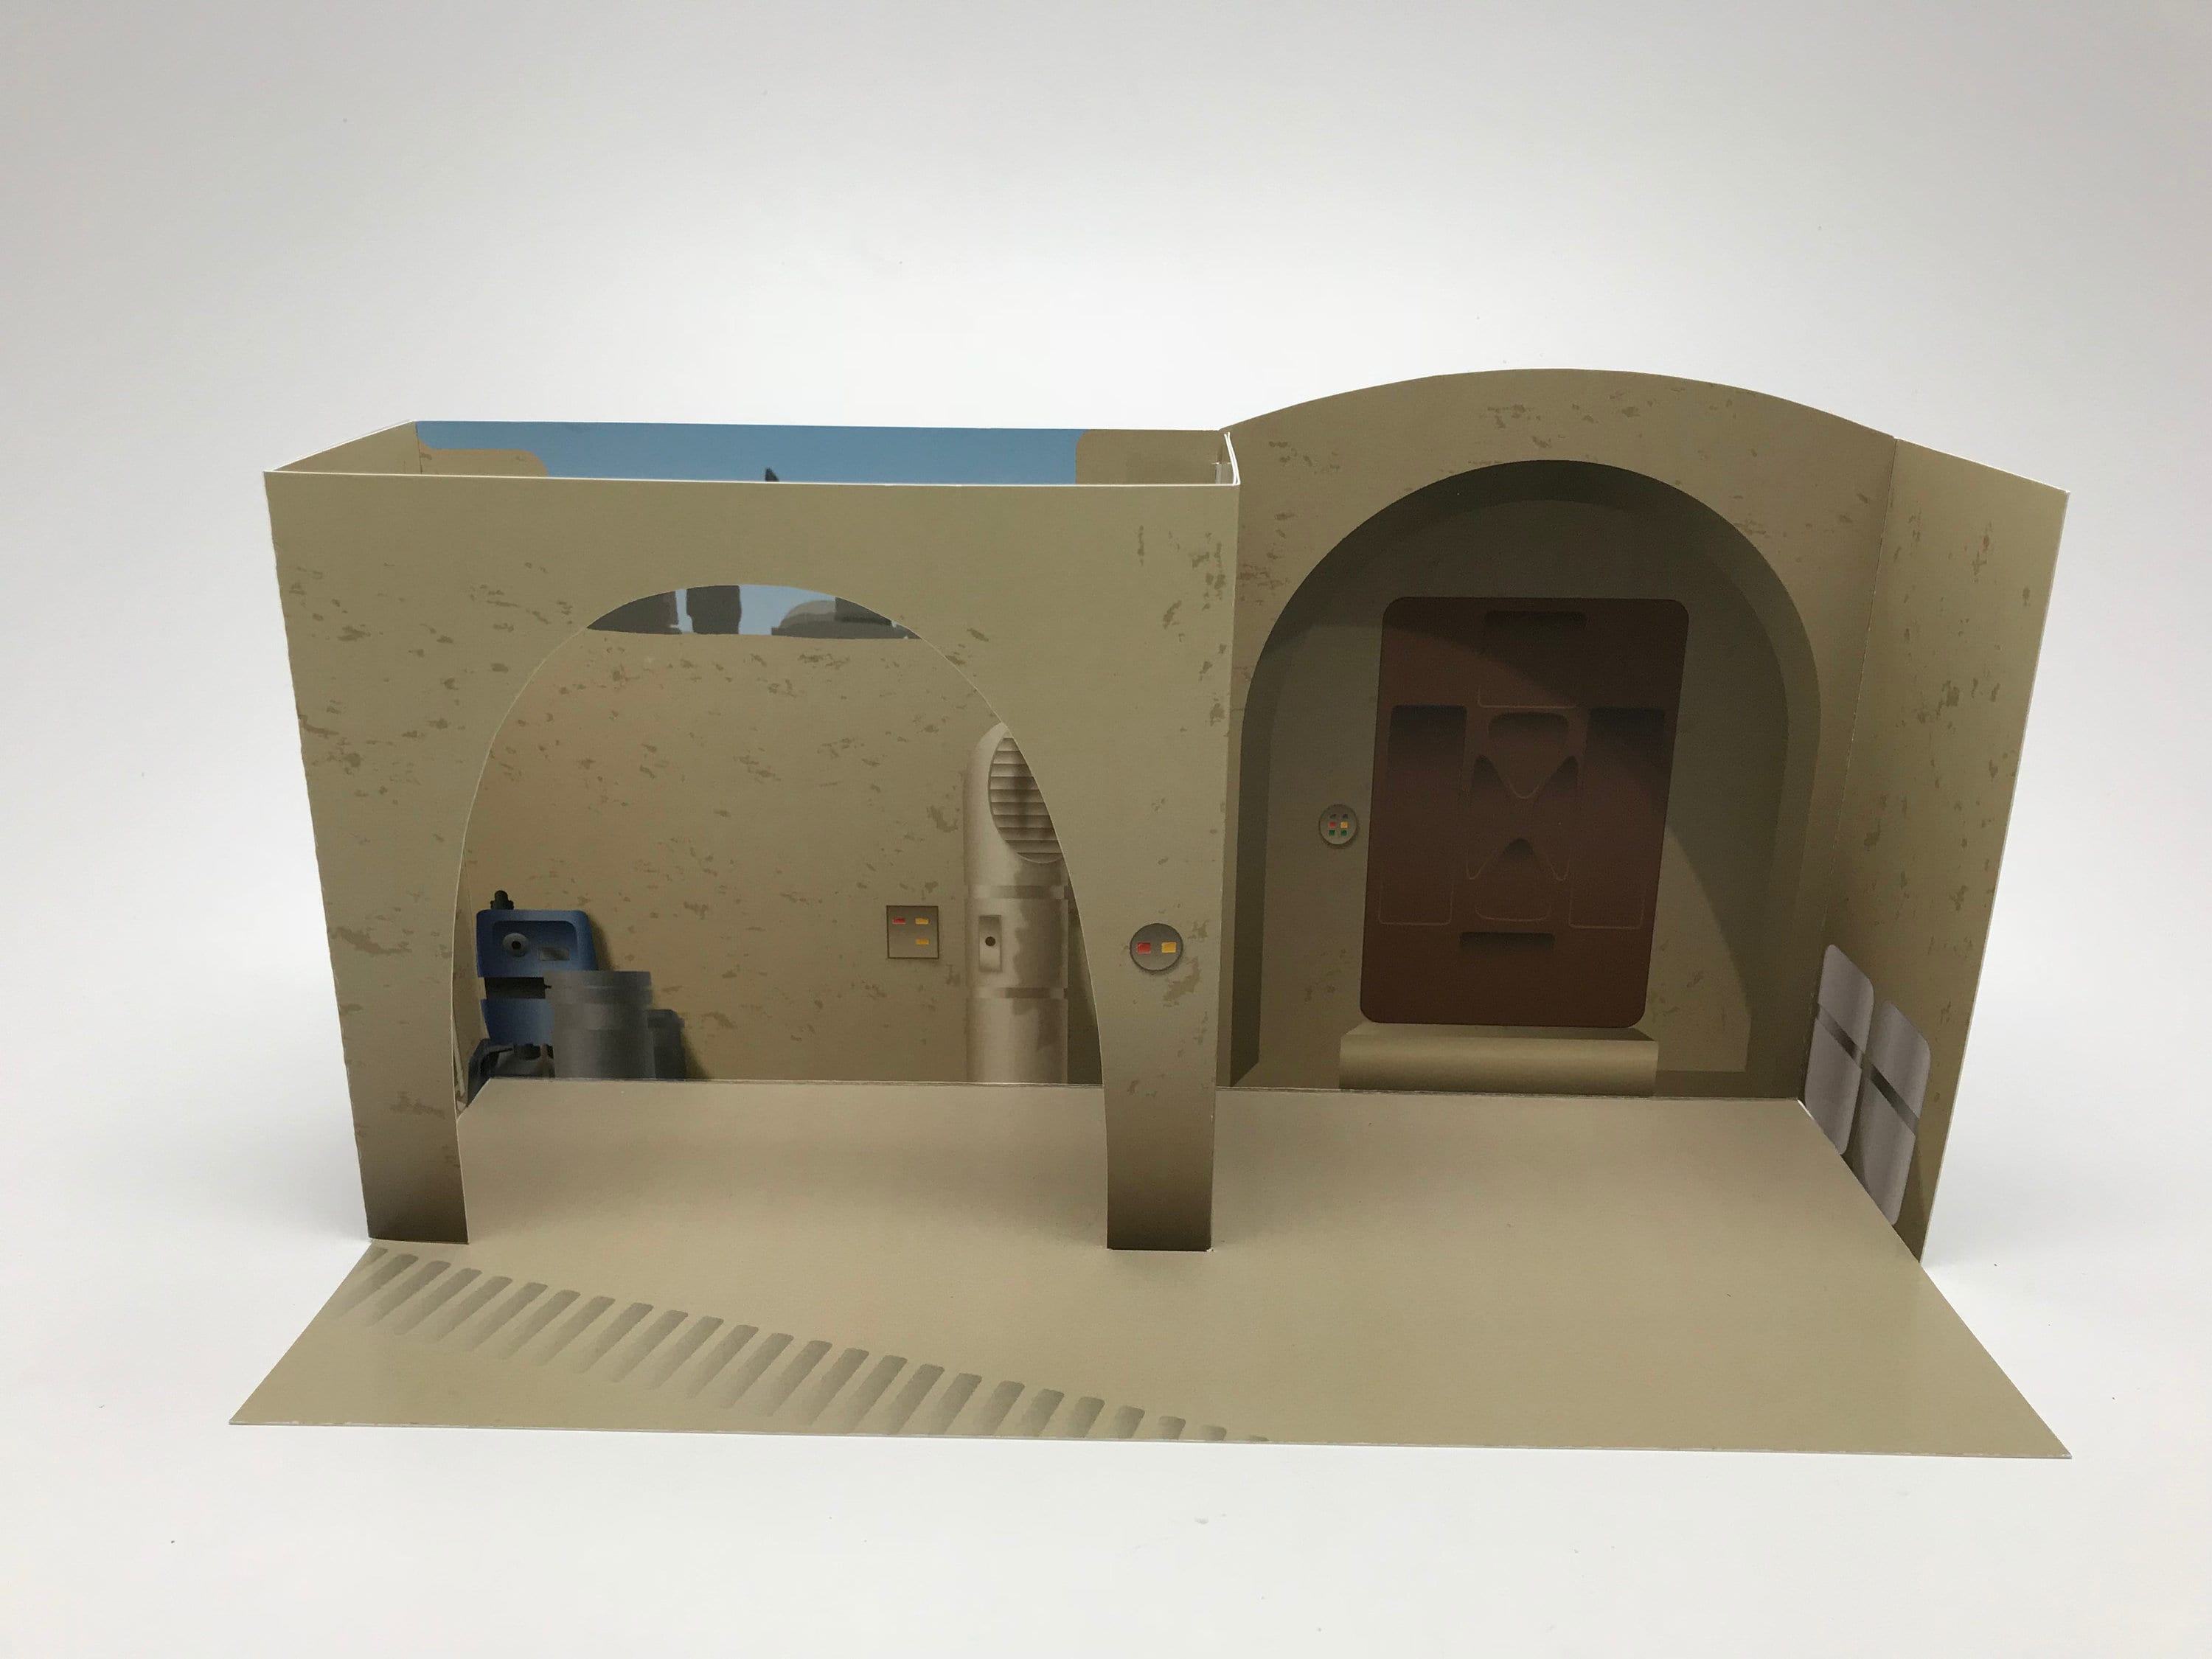 Star Wars Tatooine Action Figure Diorama - Mos Eisley Streets